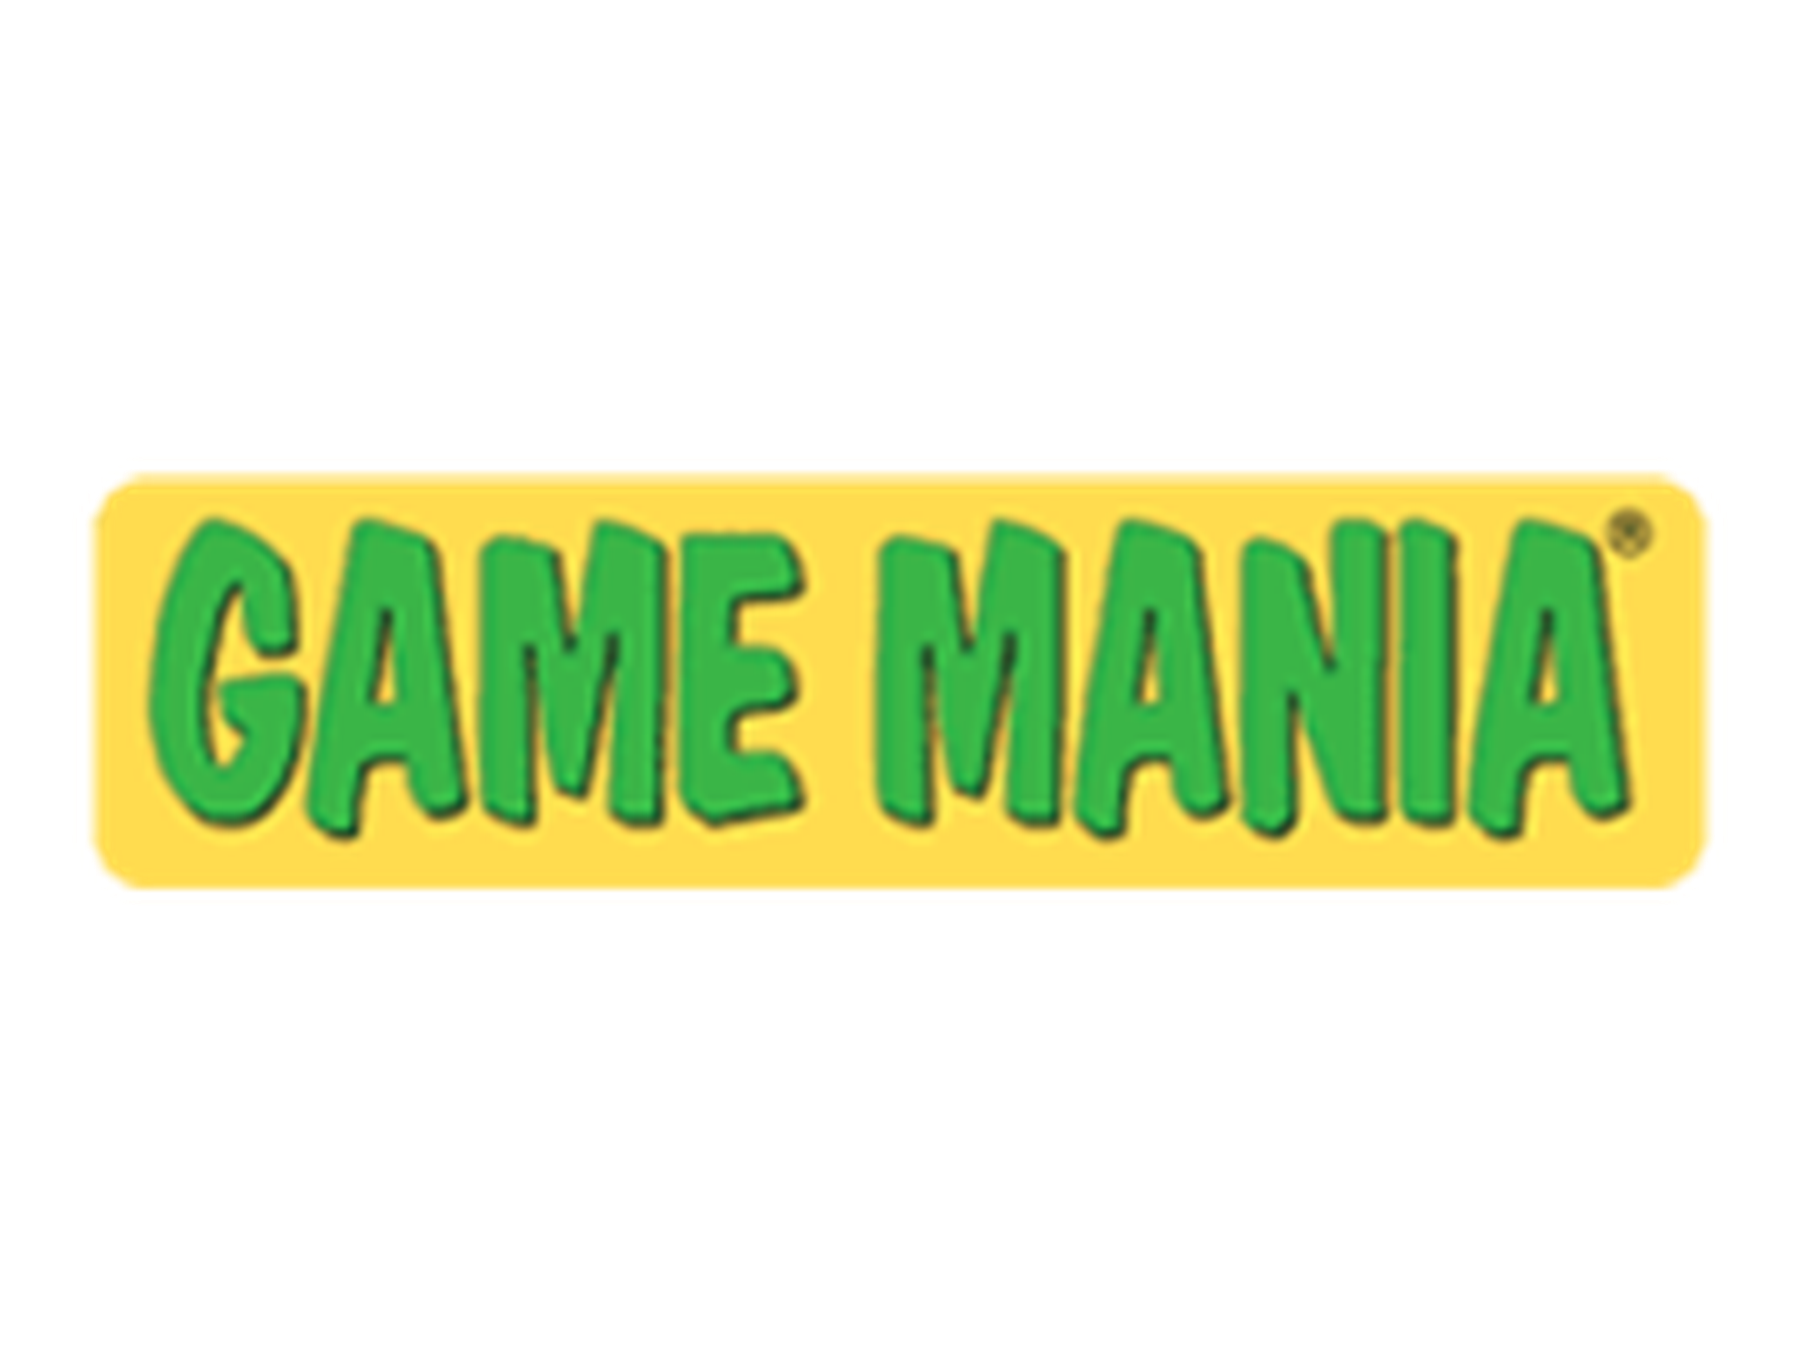 Game Mania kortingscode